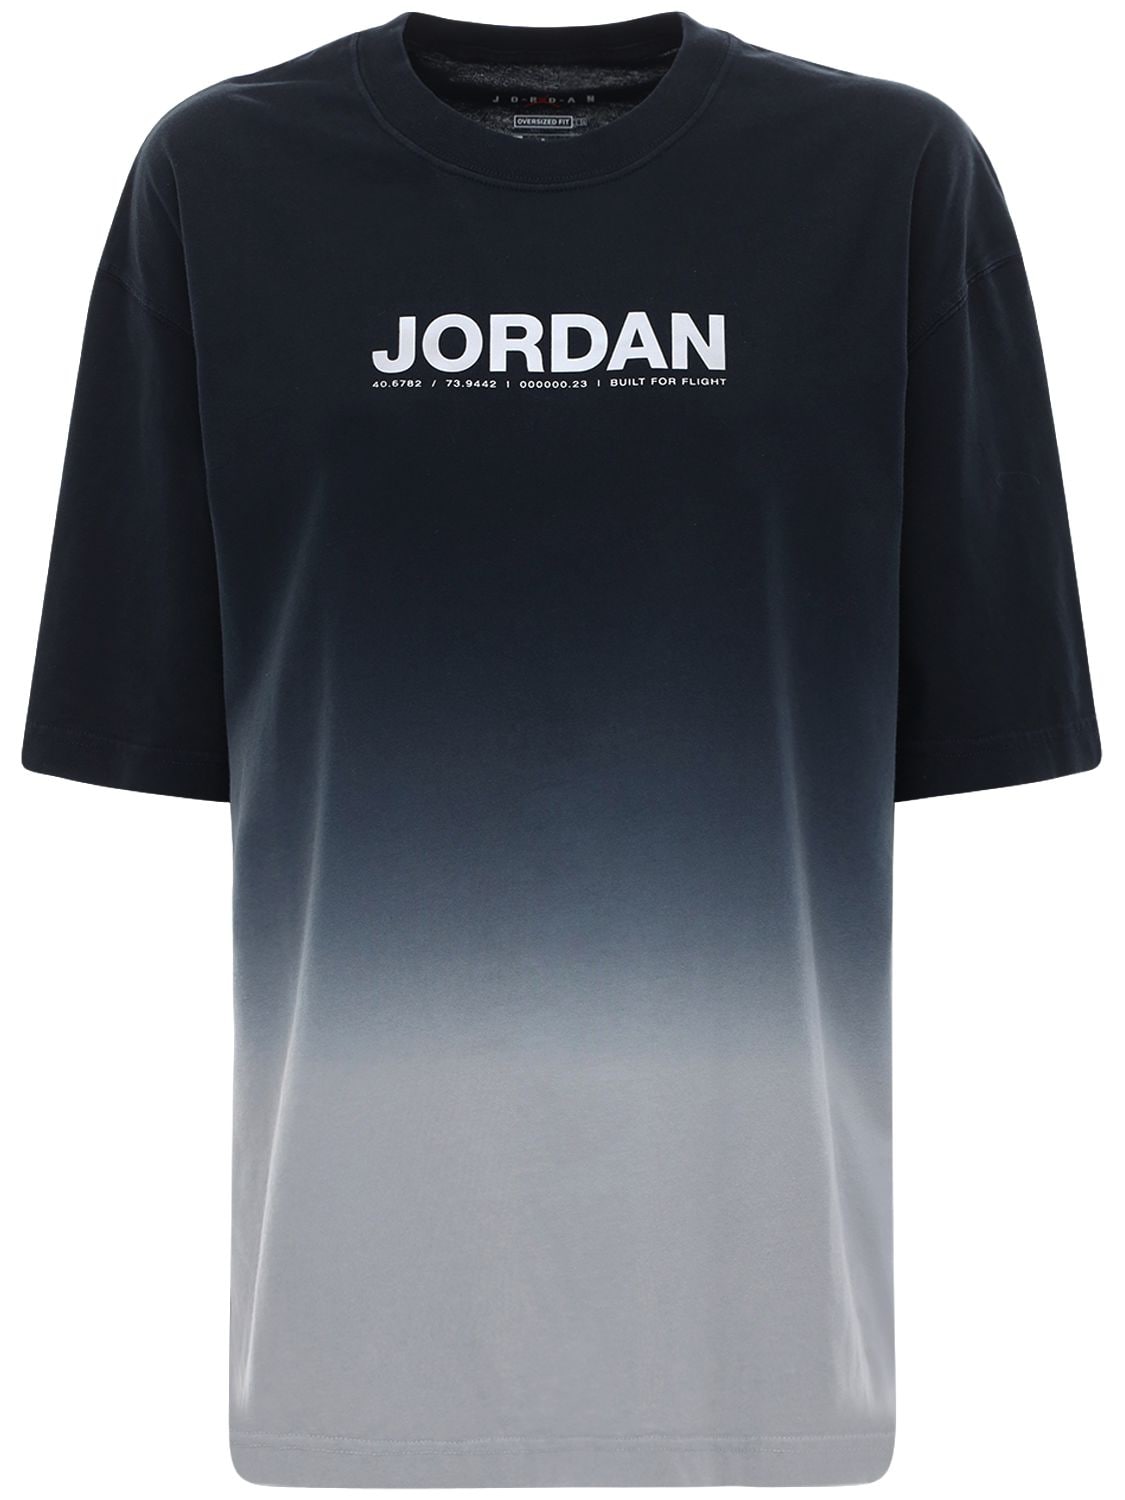 Nike Over Jordan Cotton T-shirt In Black